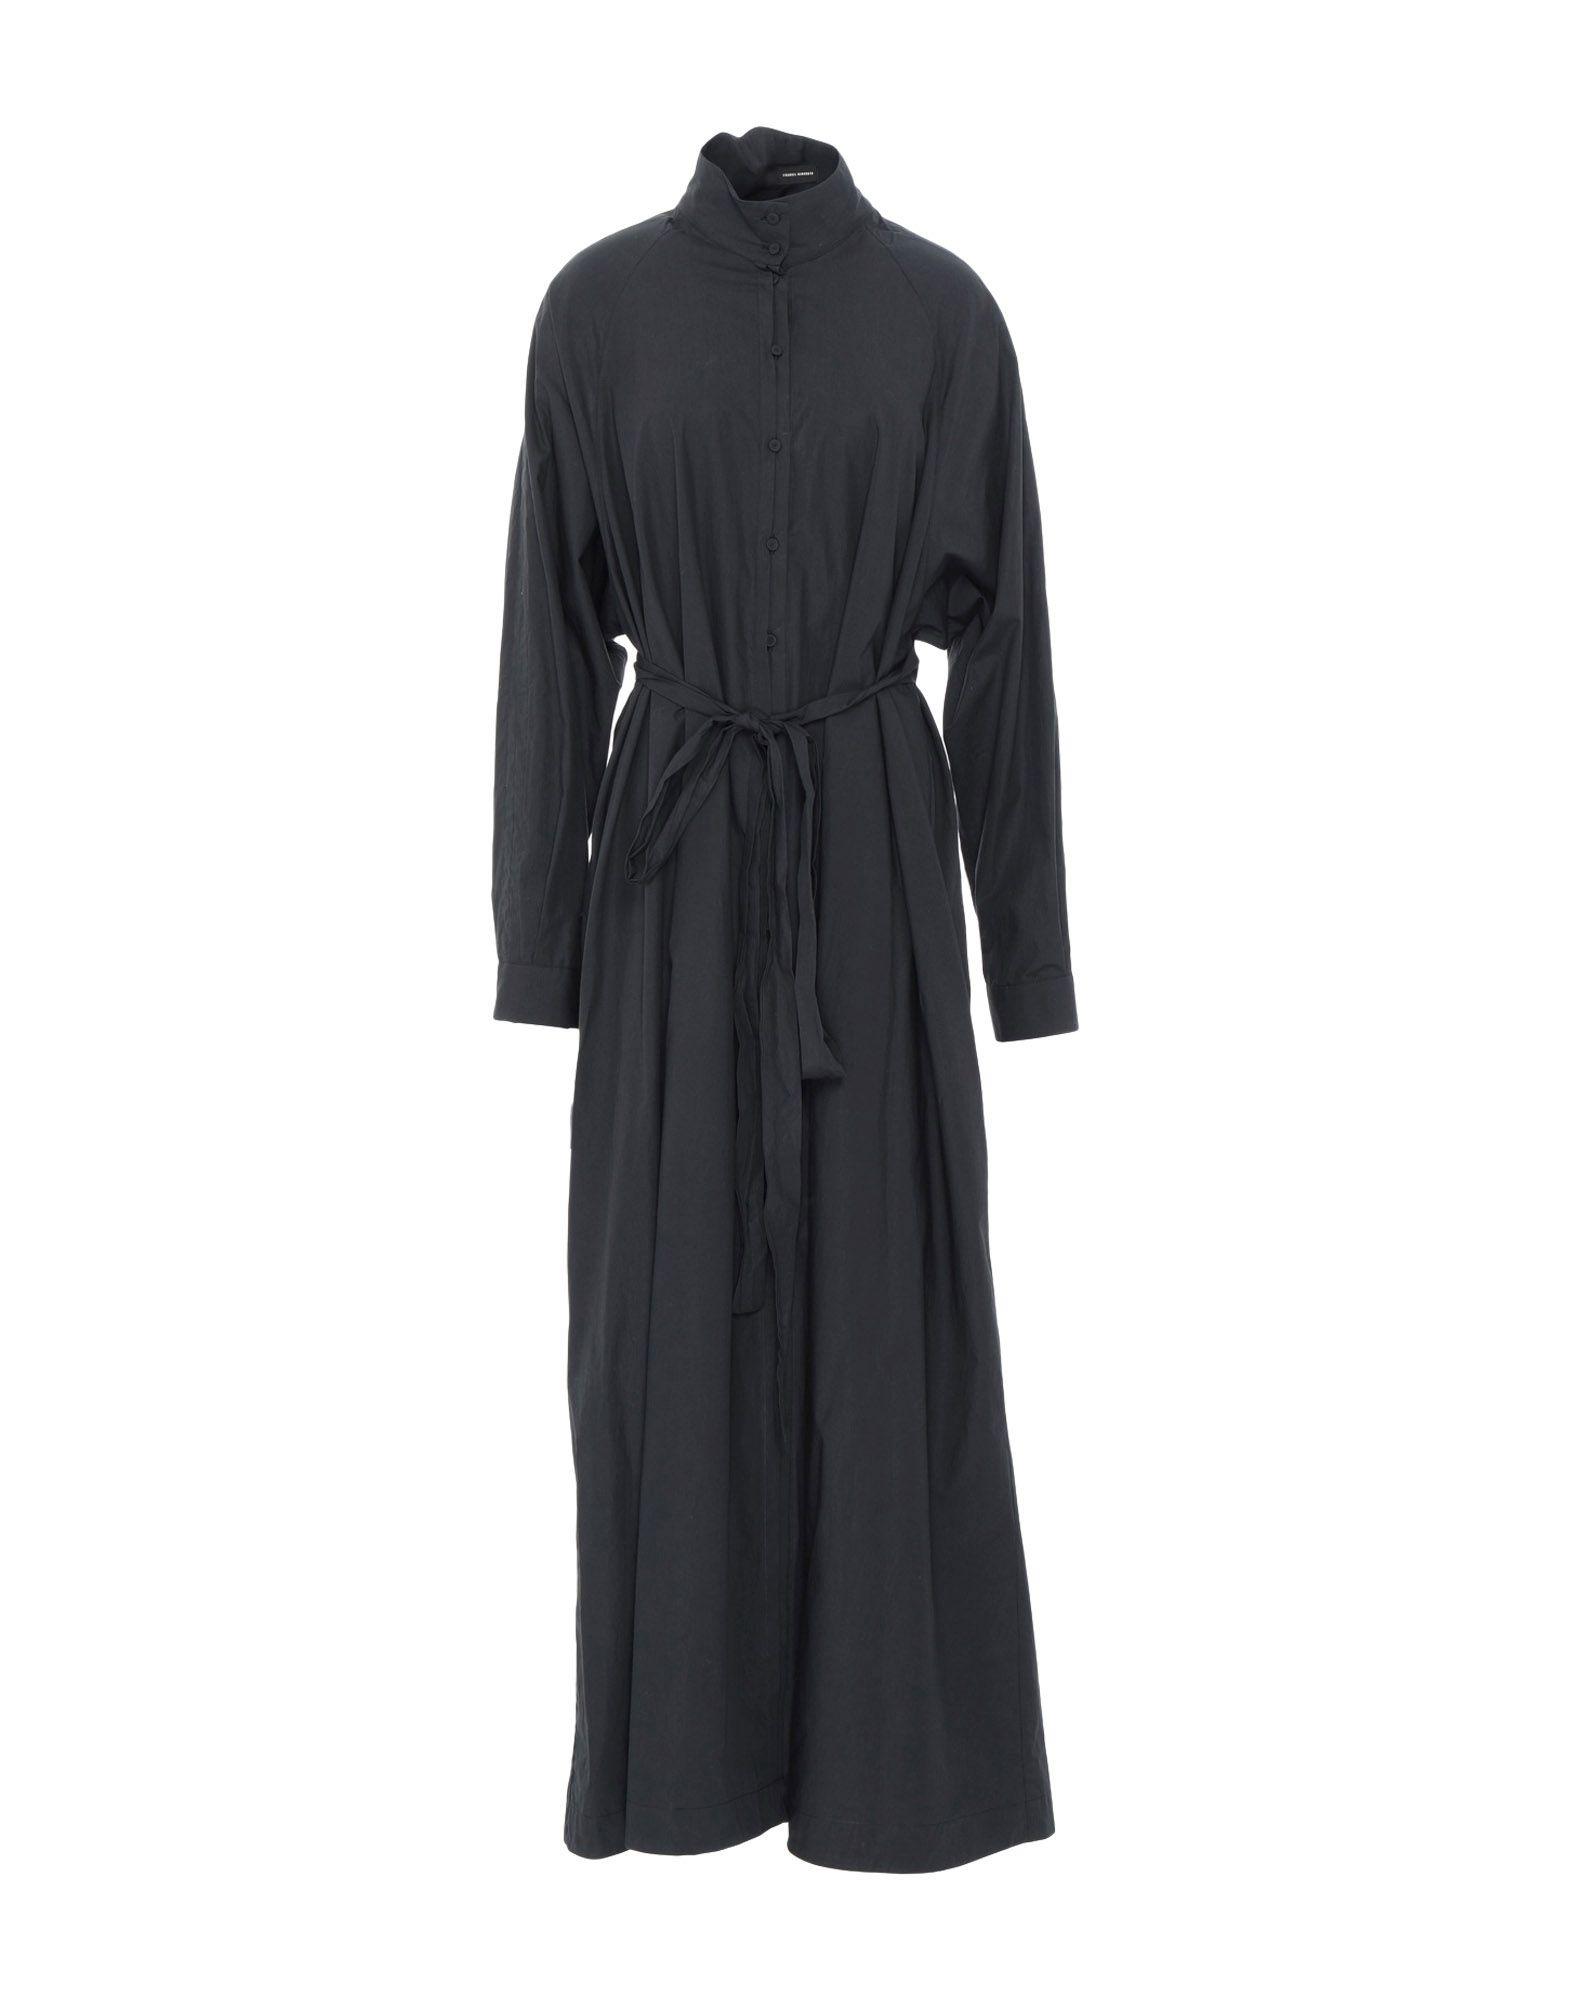 Isabel Benenato Cotton Long Dress in Black - Lyst